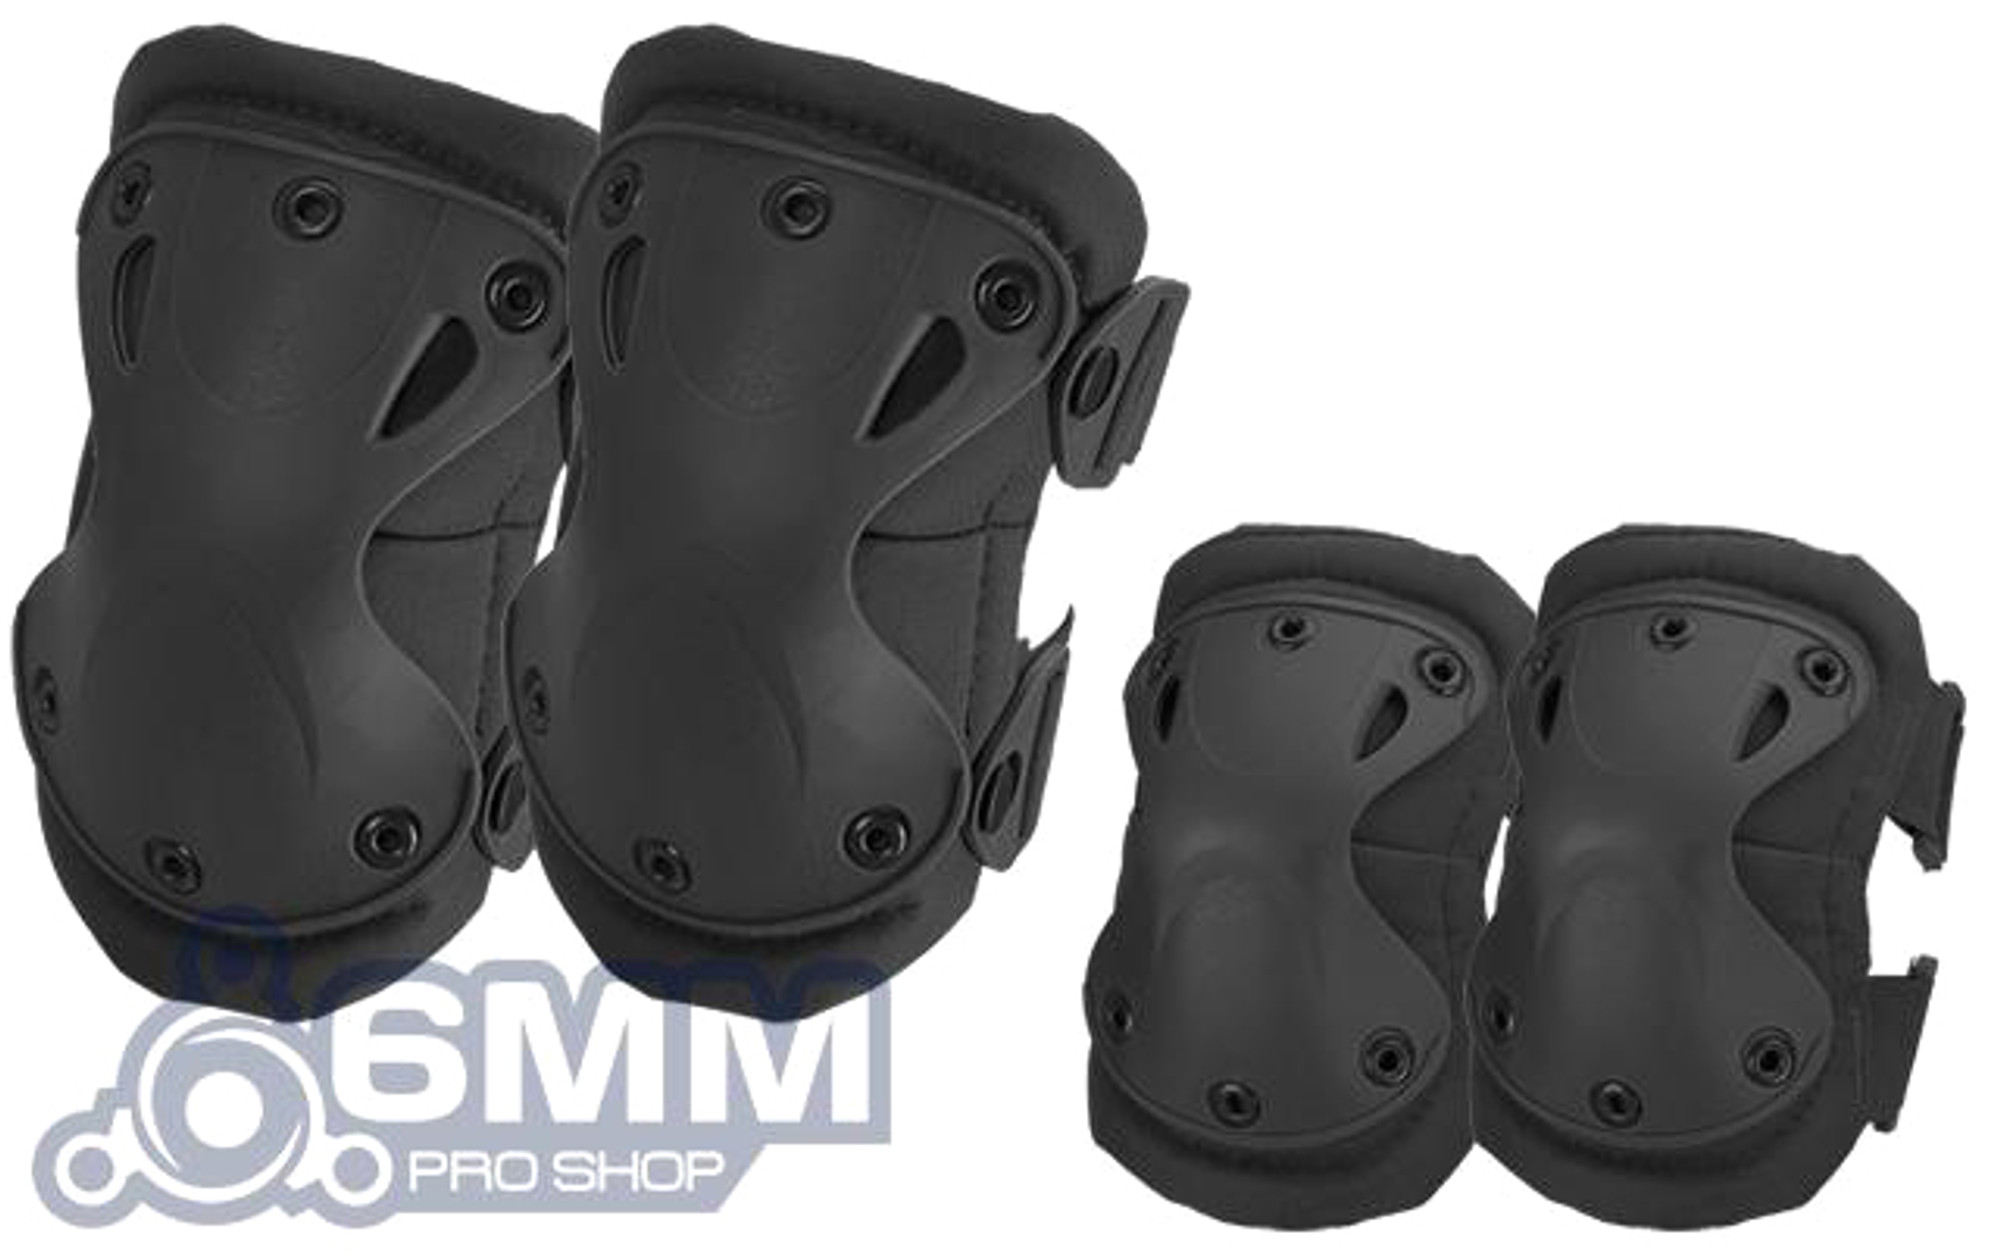 6mmProShop Tactical Knee & Elbow Pad Set - Black